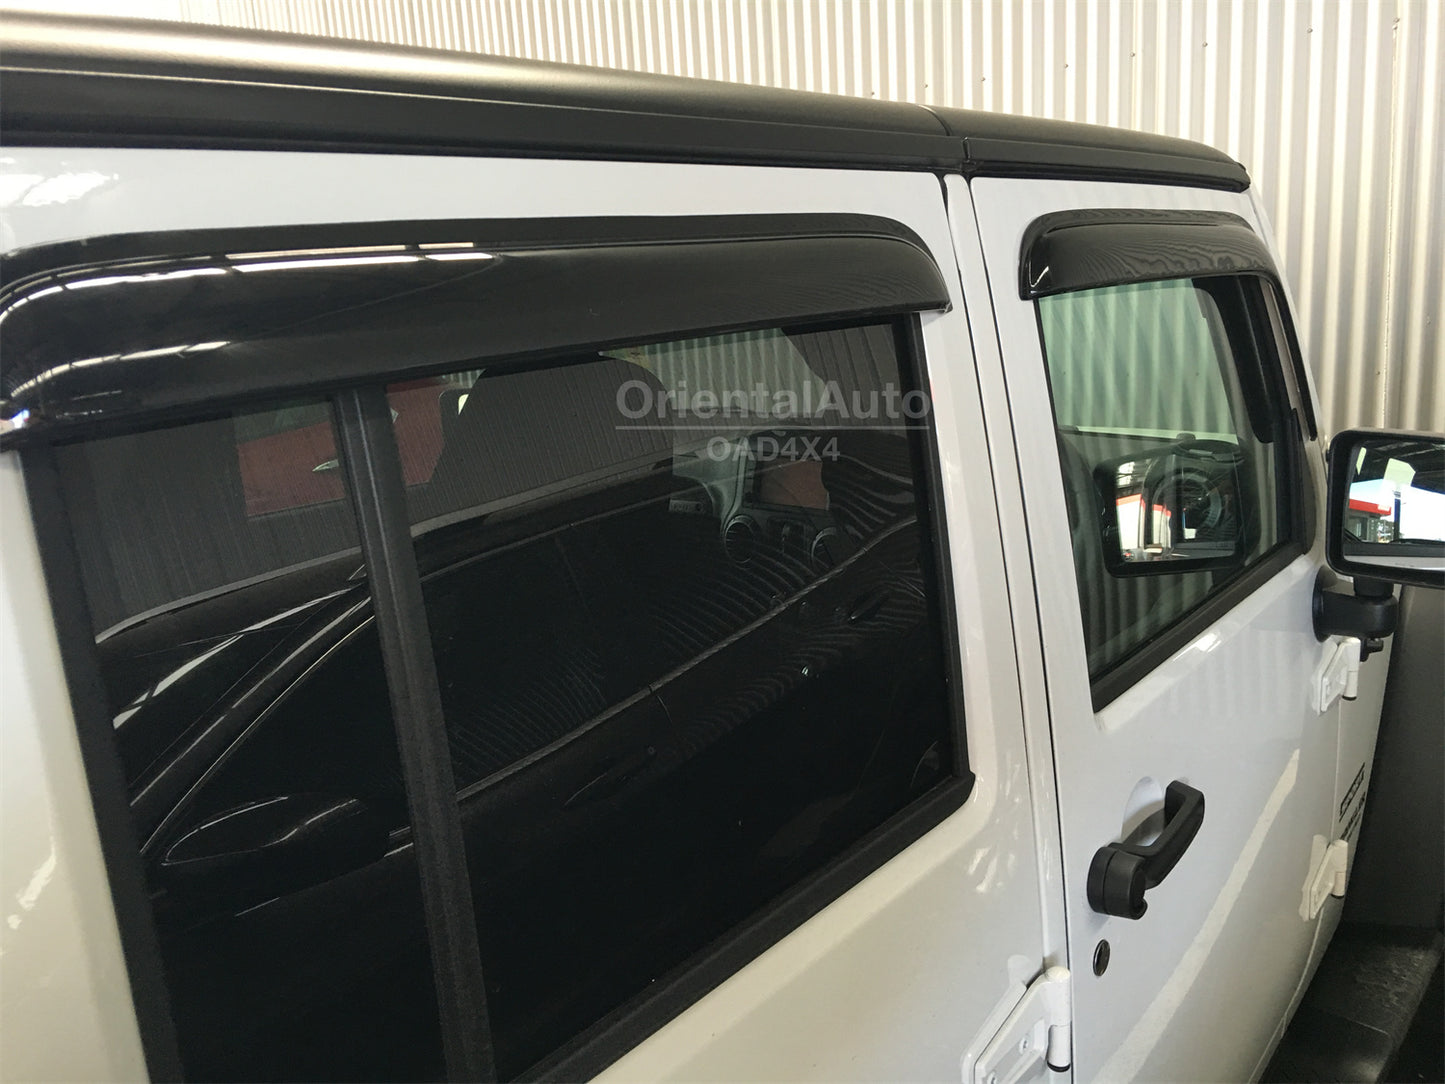 Luxury Weathershields Weather Shields Window Visor For Jeep Wrangler JK 4D 2007-2018